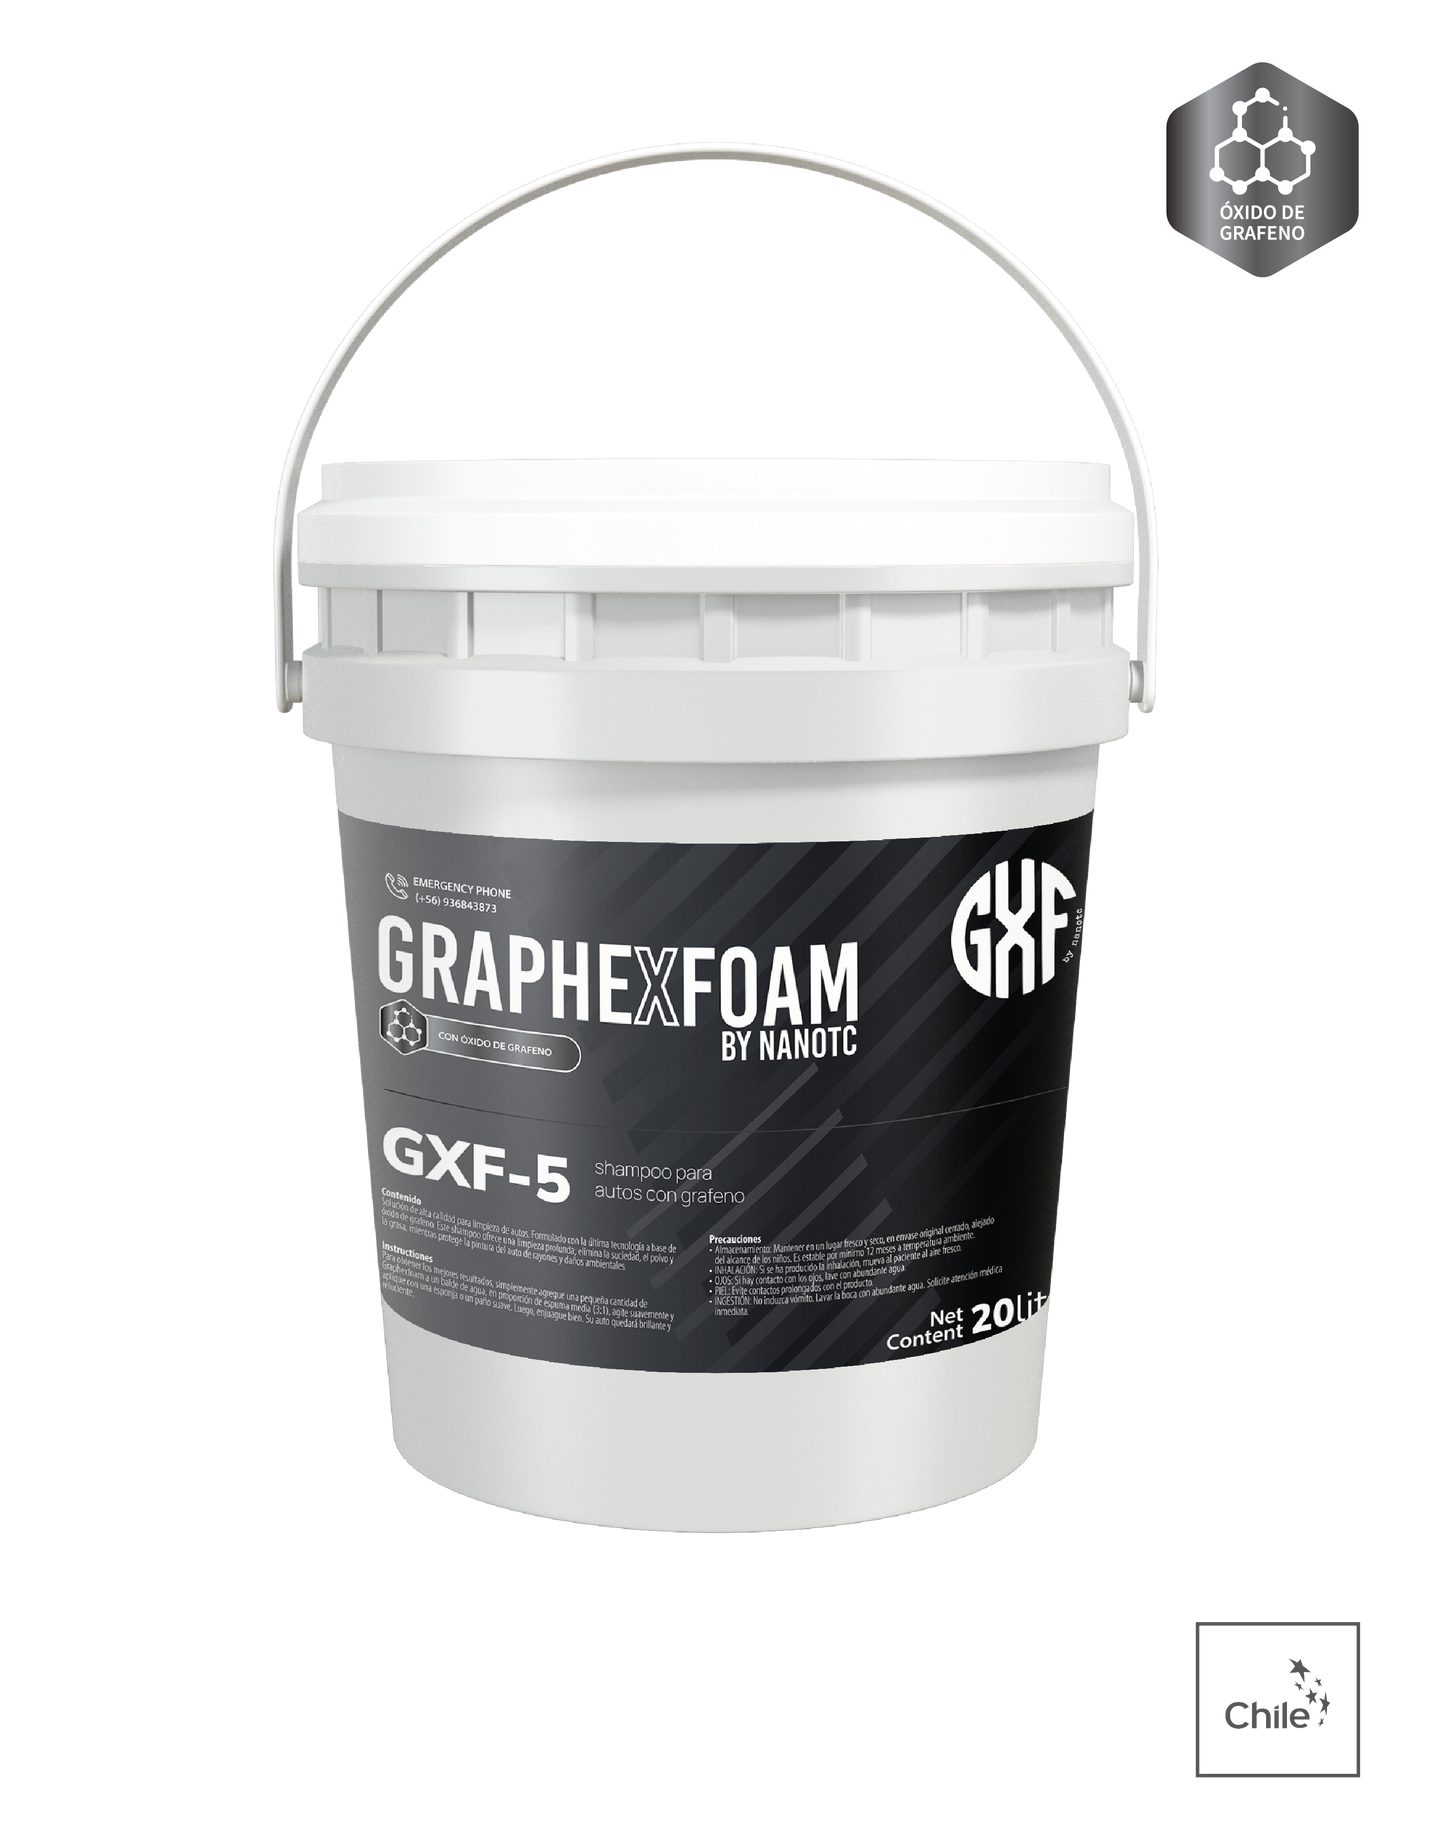 GrapheXfoam – Snow foam con óxido de grafeno